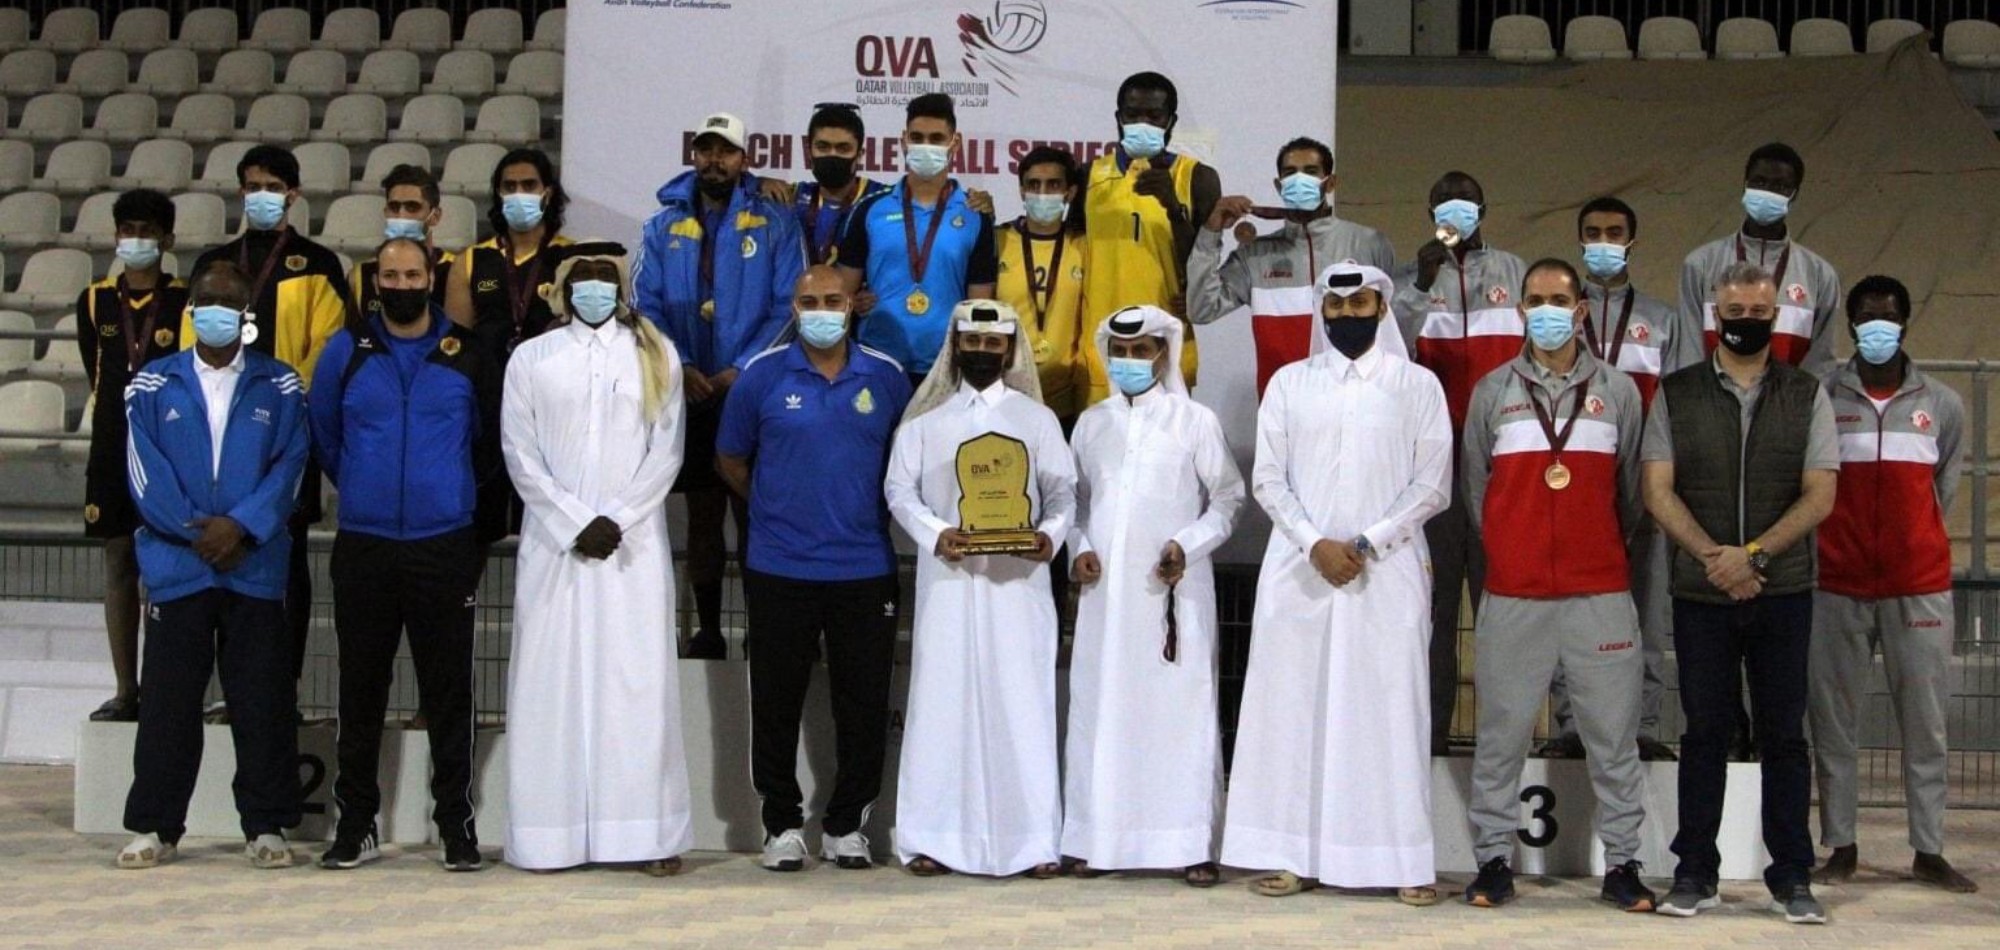 Al Gharafa crowned champions of first BVB league in Qatar